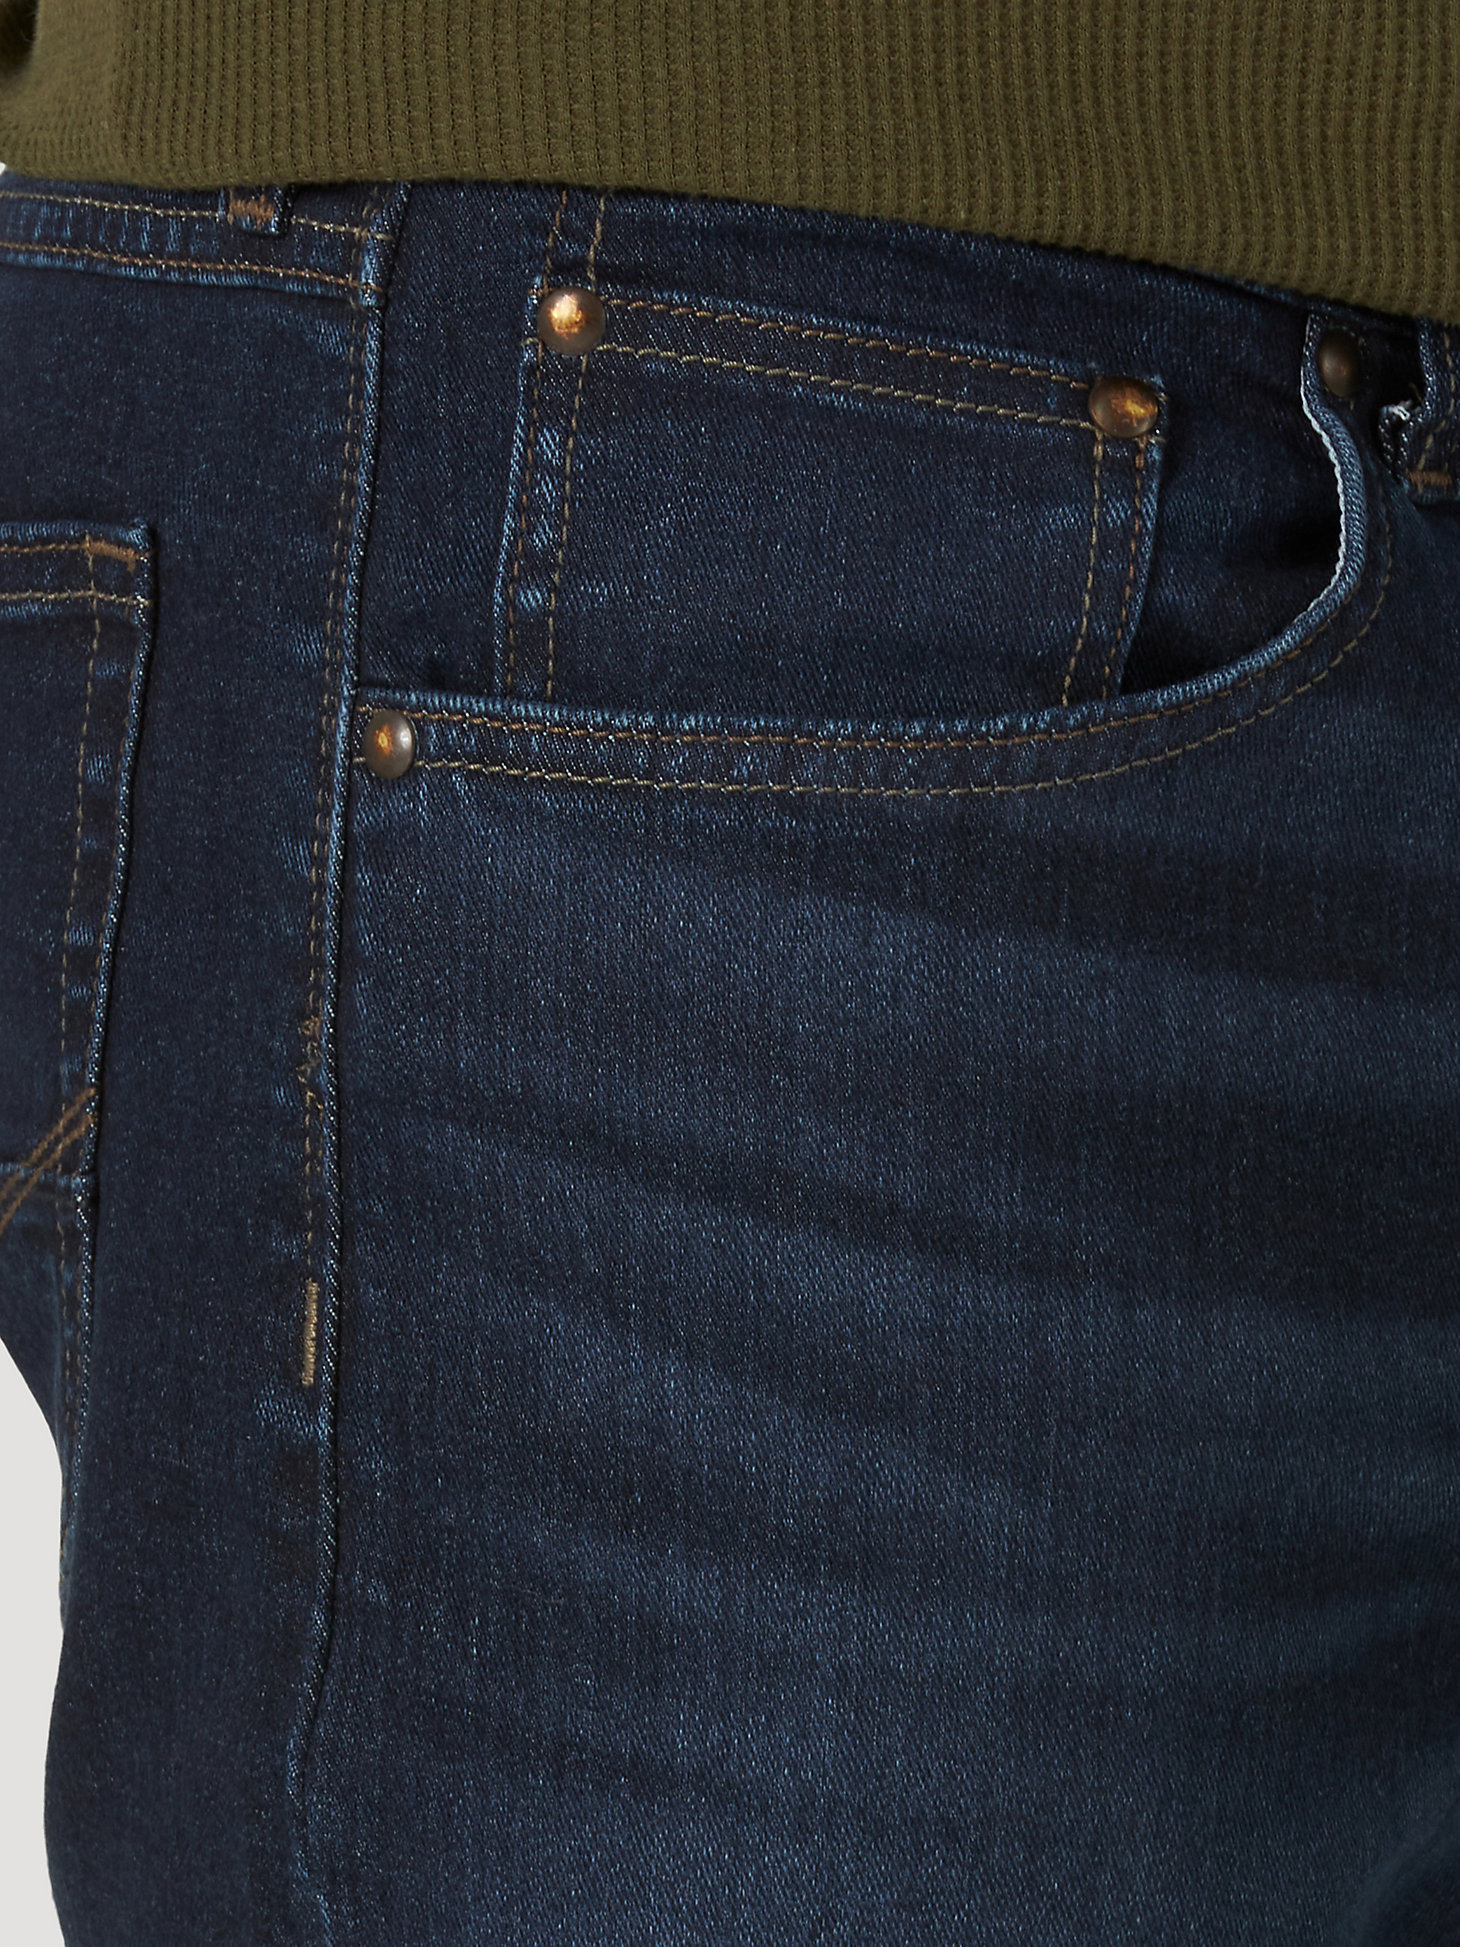 Men's Five Star Premium Slim Straight Jean in Dark Colbalt alternative view 4